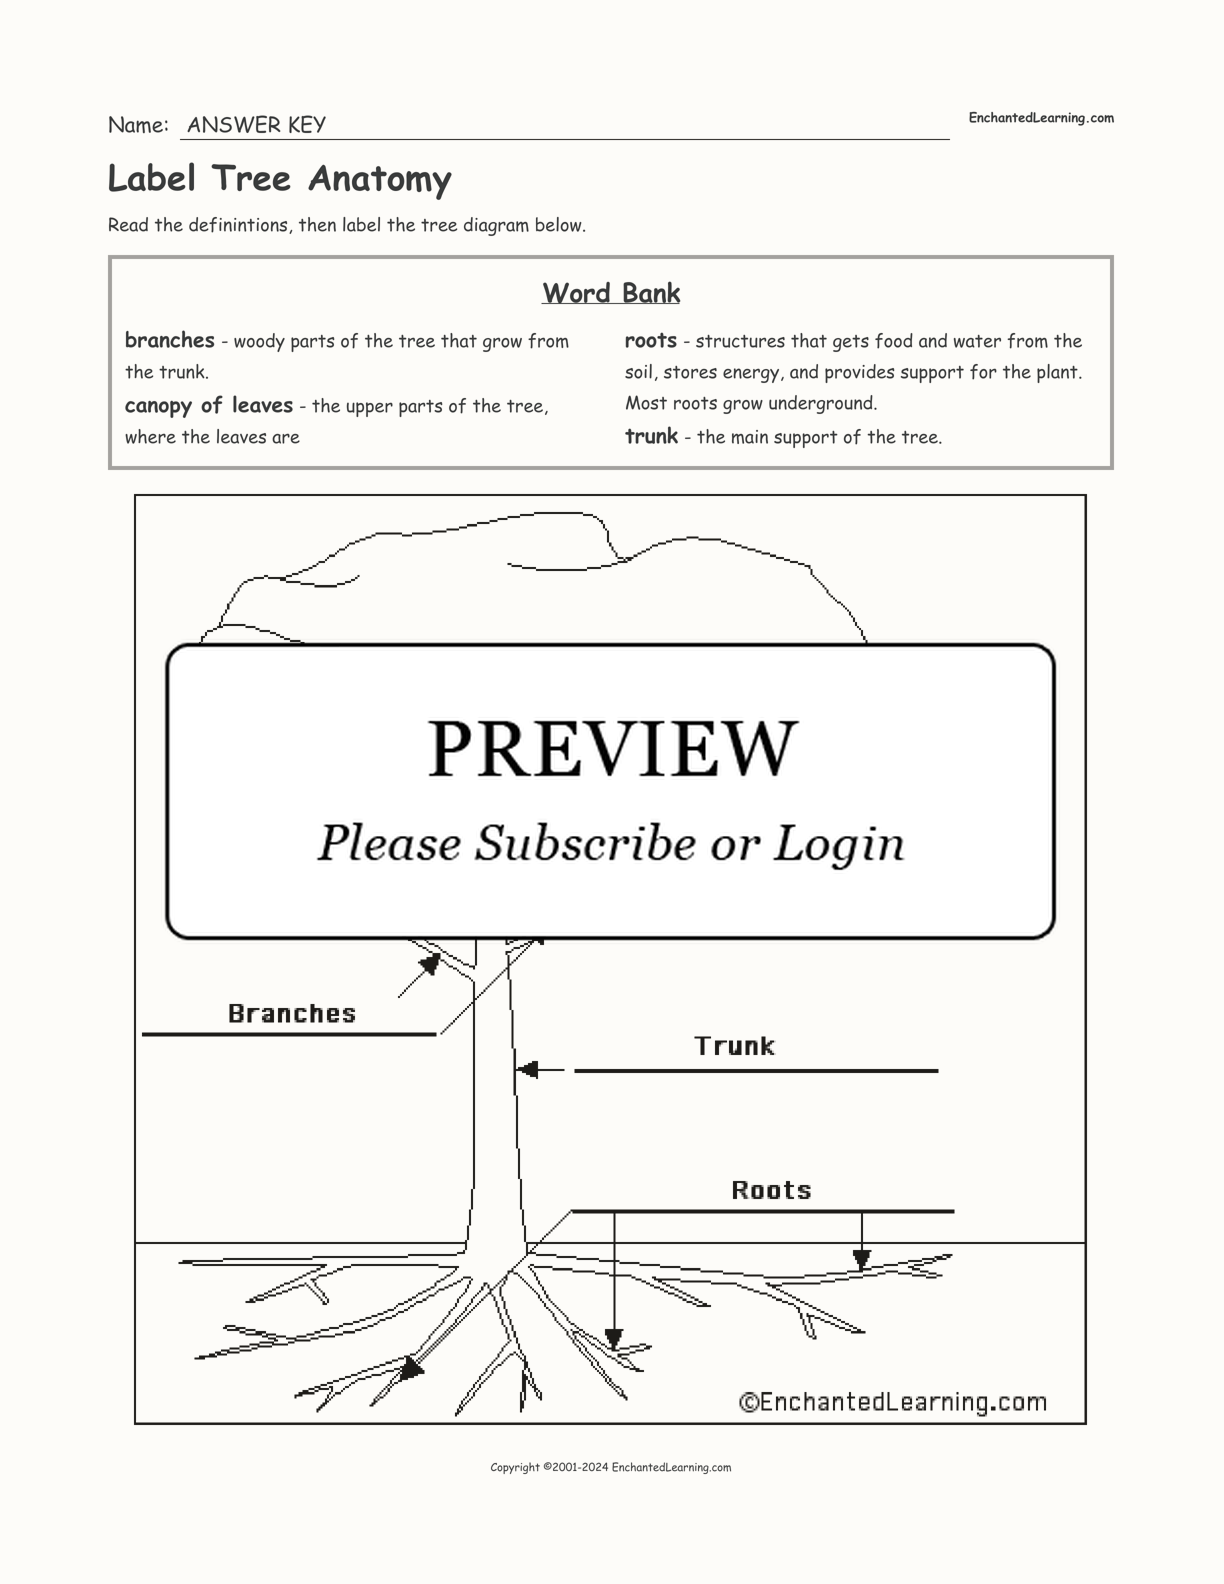 Label Tree Anatomy interactive worksheet page 2